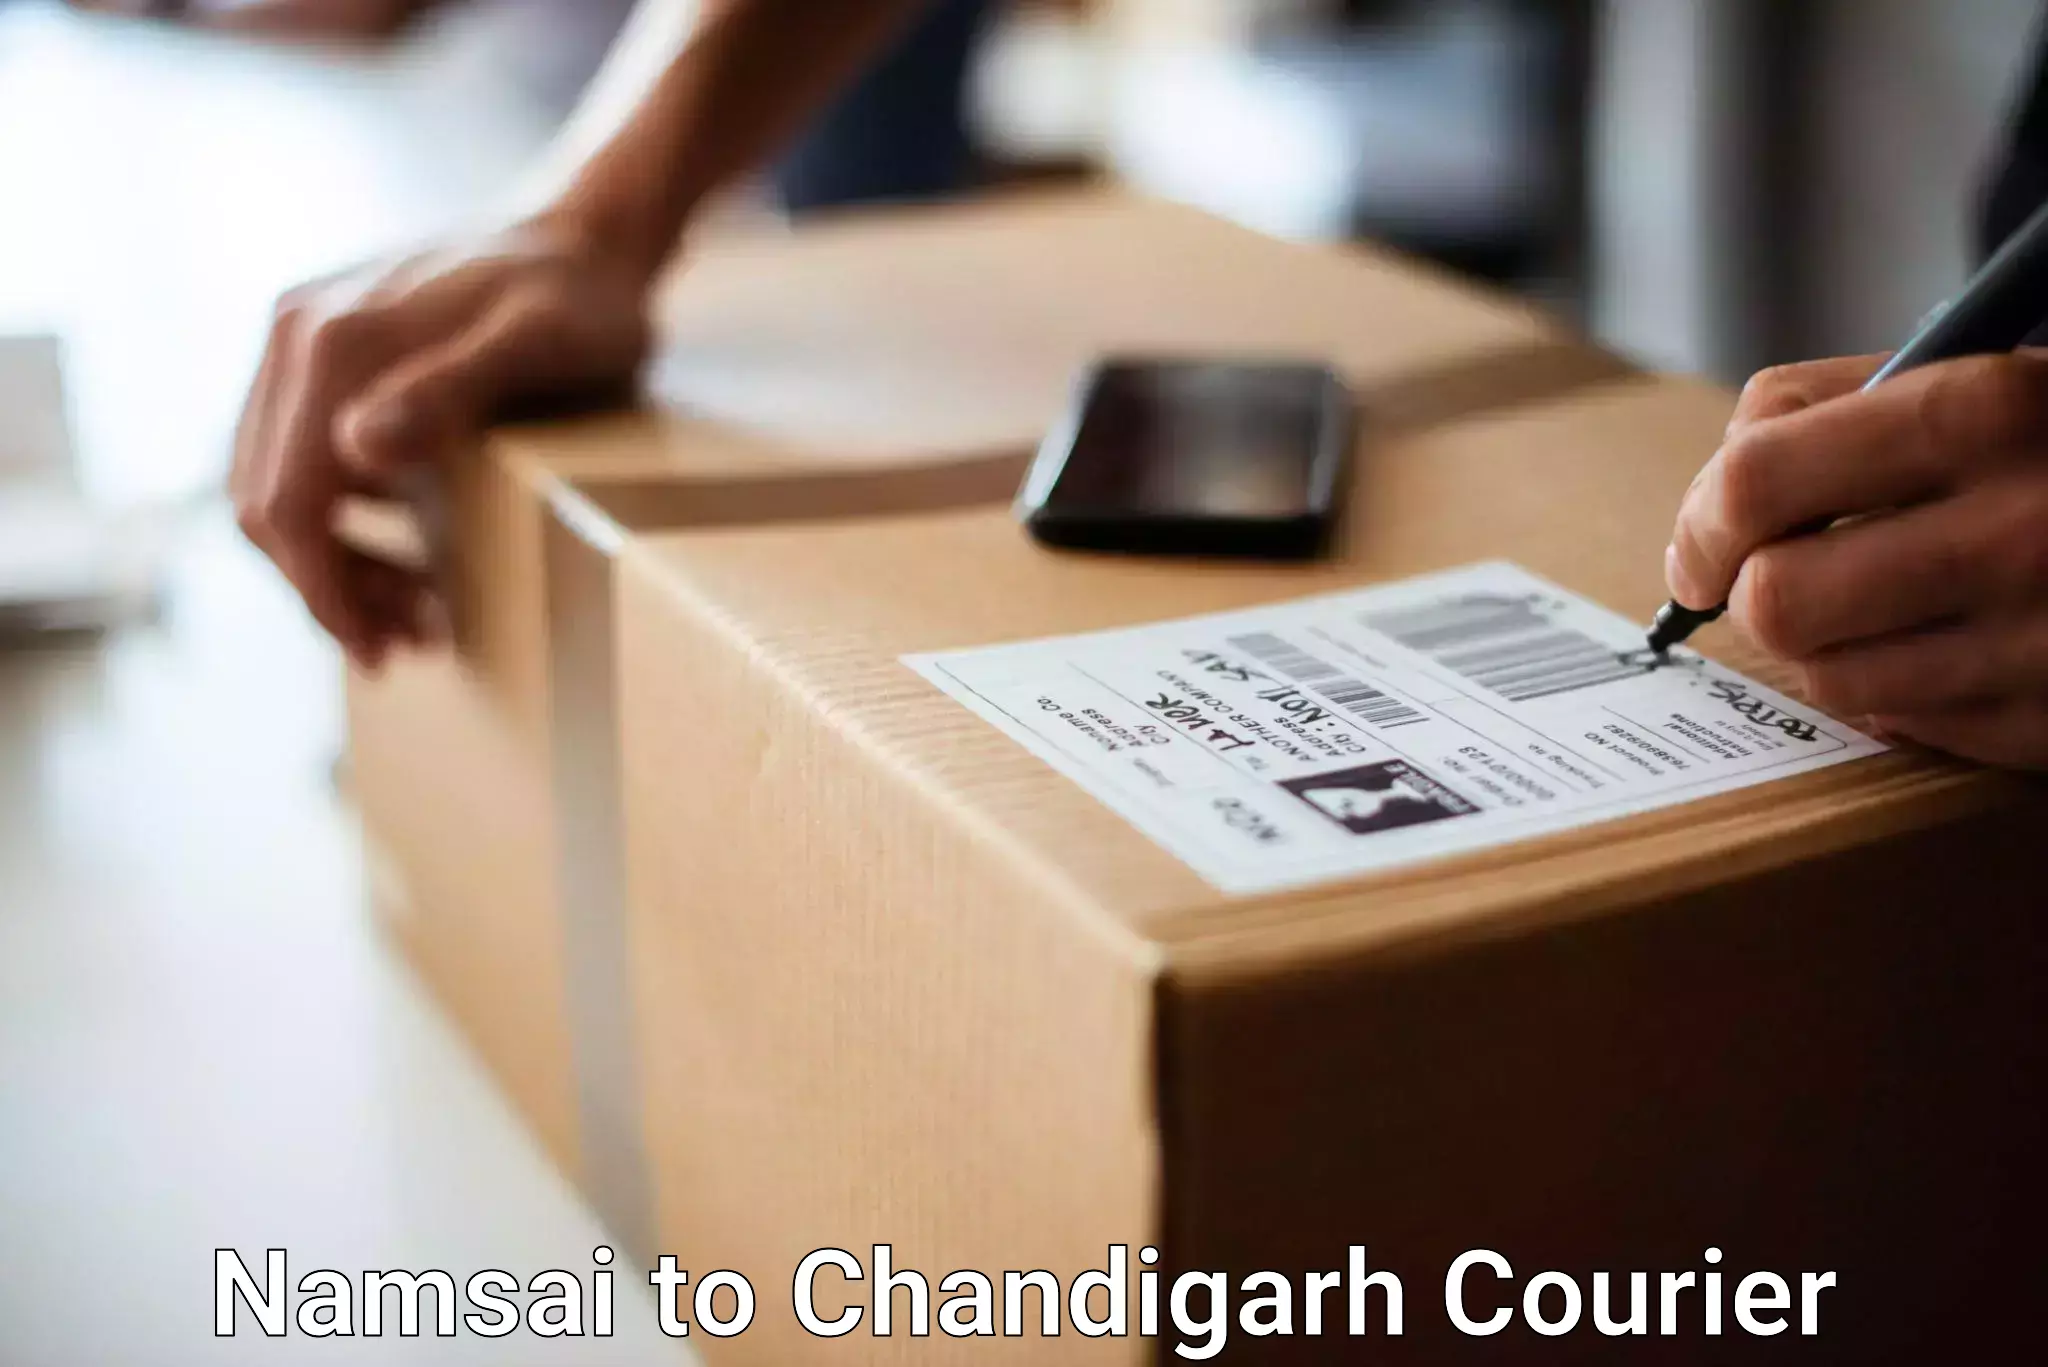 Luggage shipment specialists Namsai to Chandigarh